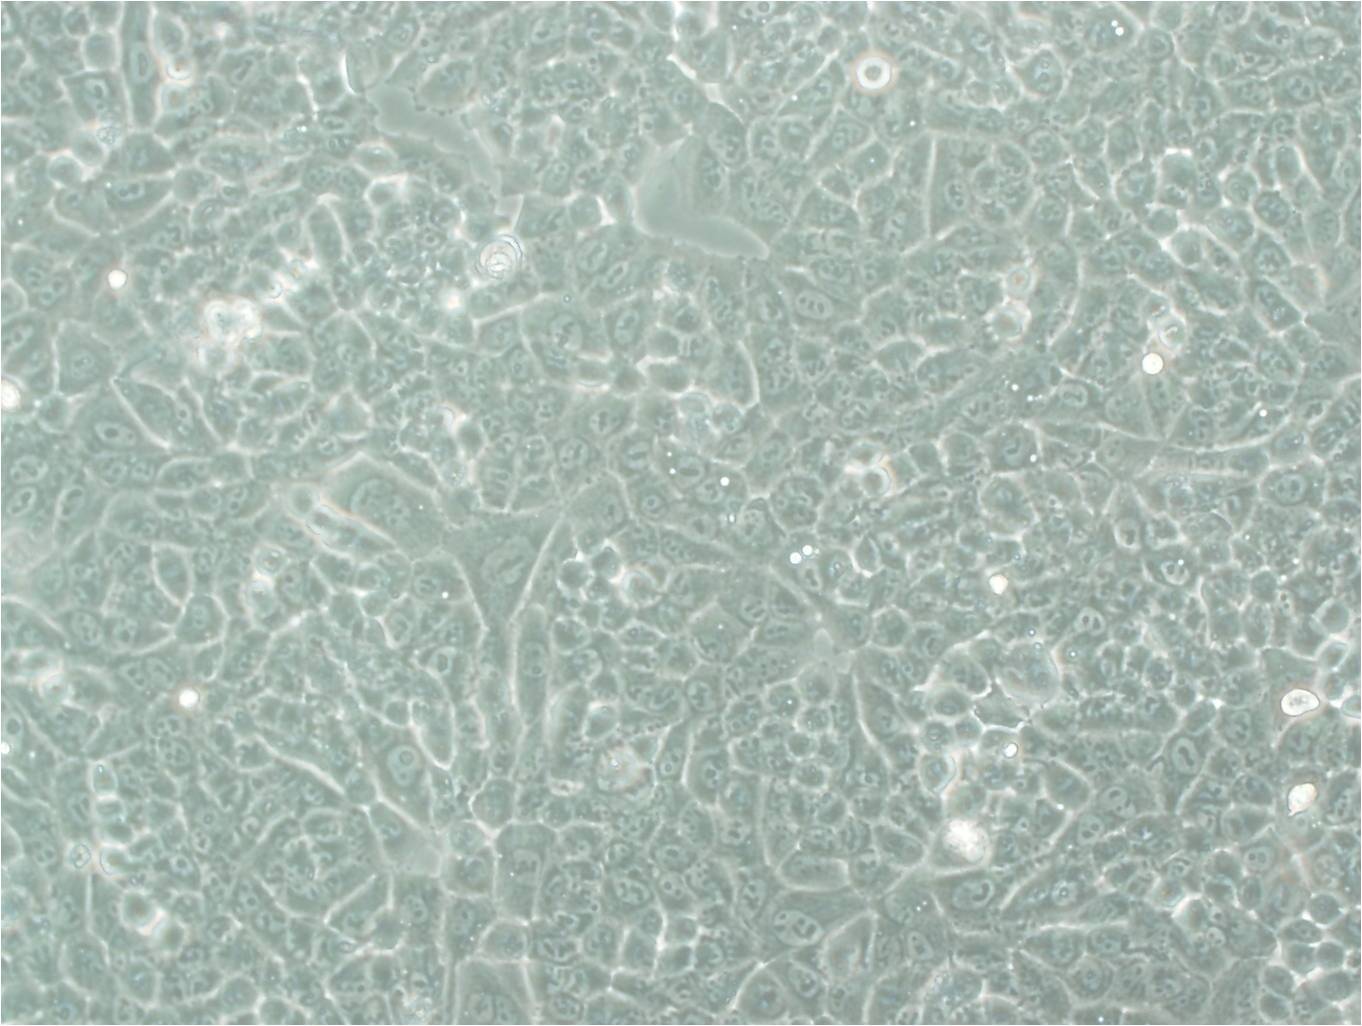 SNB-19人胶质瘤复苏细胞(附STR鉴定报告)